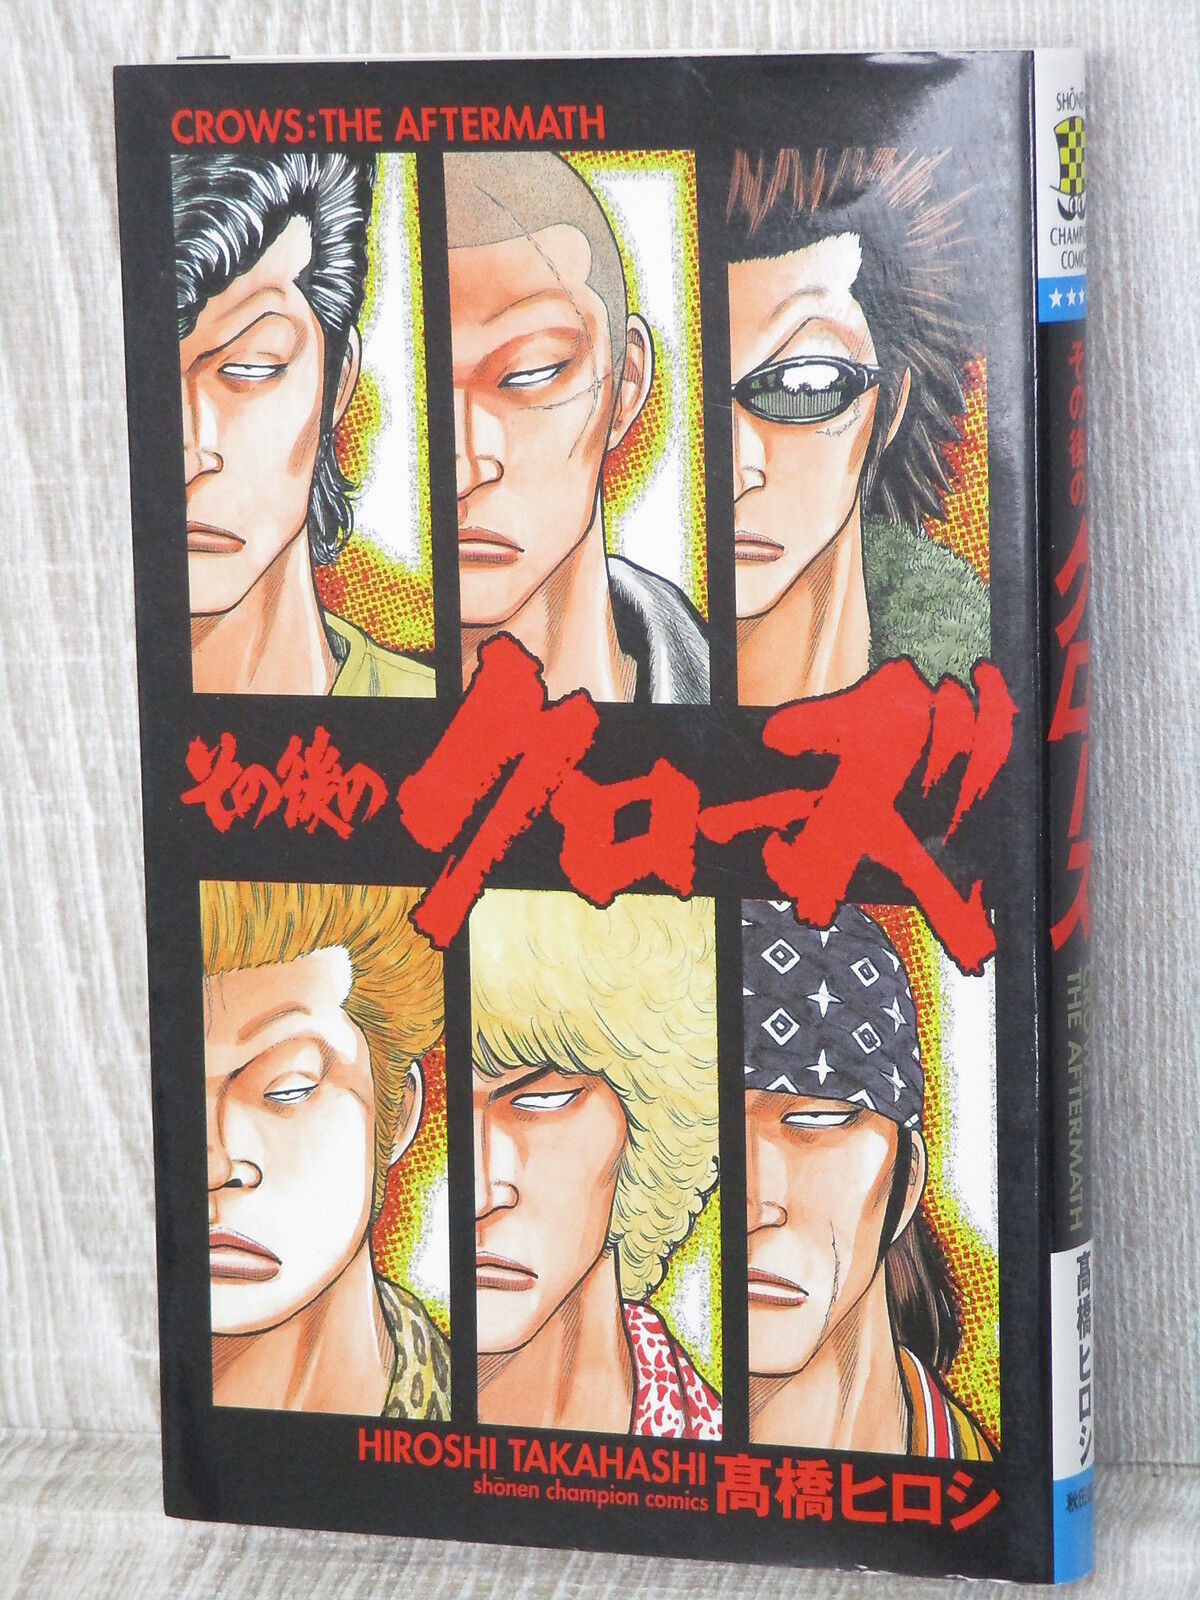 CROWS THE AFTERMATH Manga Comic HIROSHI TAKAHASHI Japan Book 2001 AK43